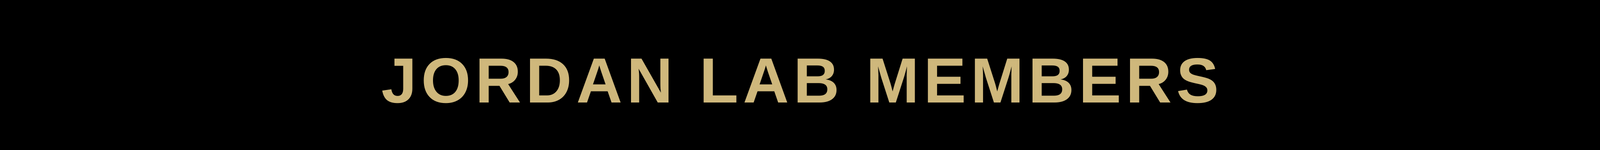 Discover the Jordan Lab